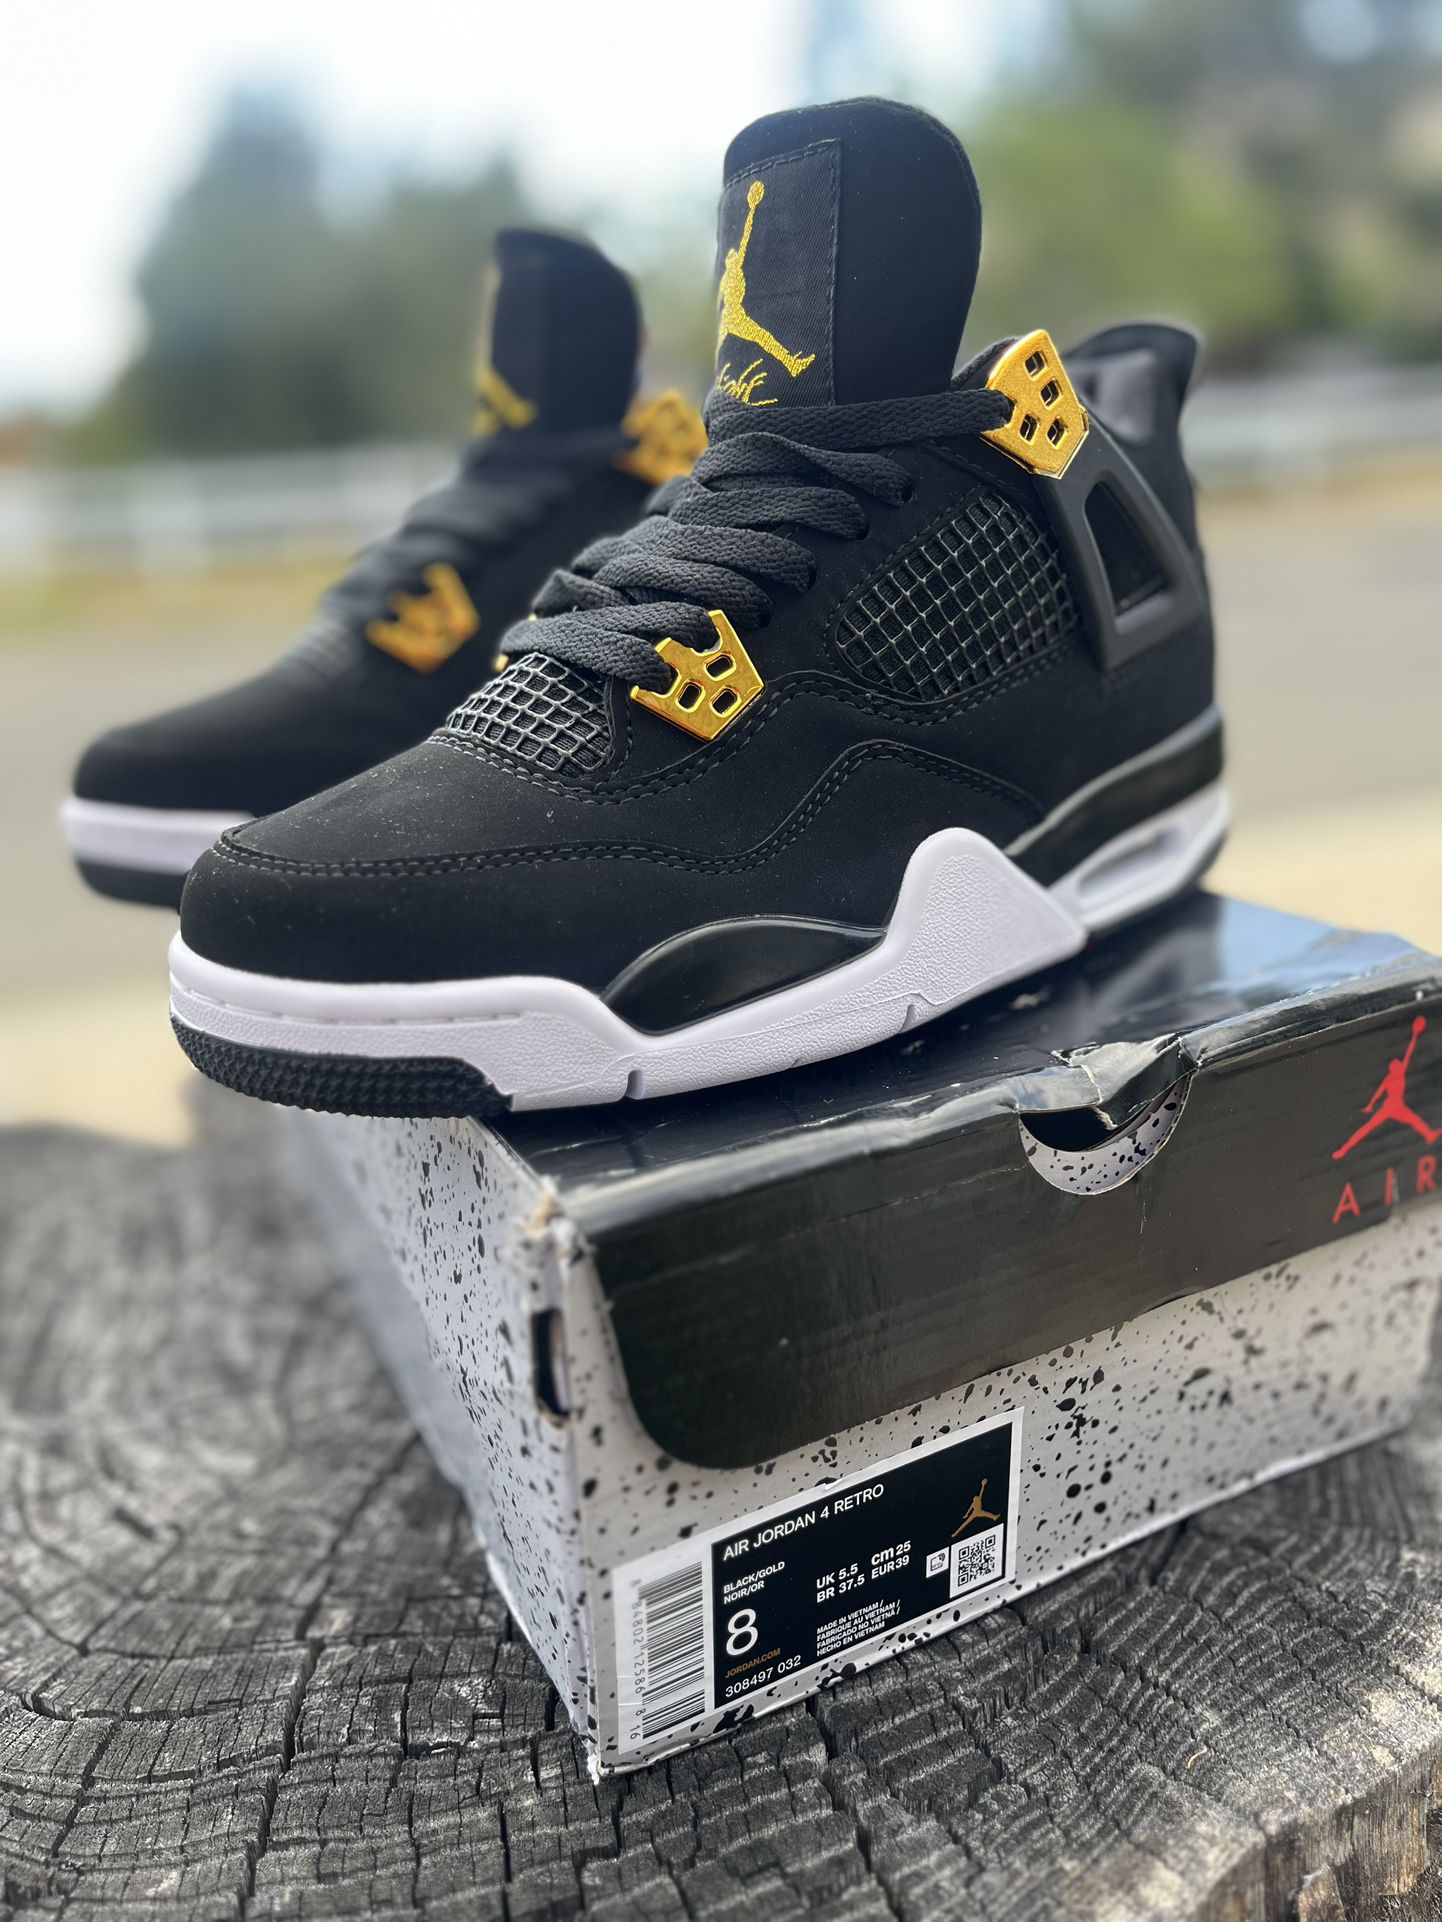 Nike Jordan 4s Retro GS Black & Gold With Box Woman’s Size 8